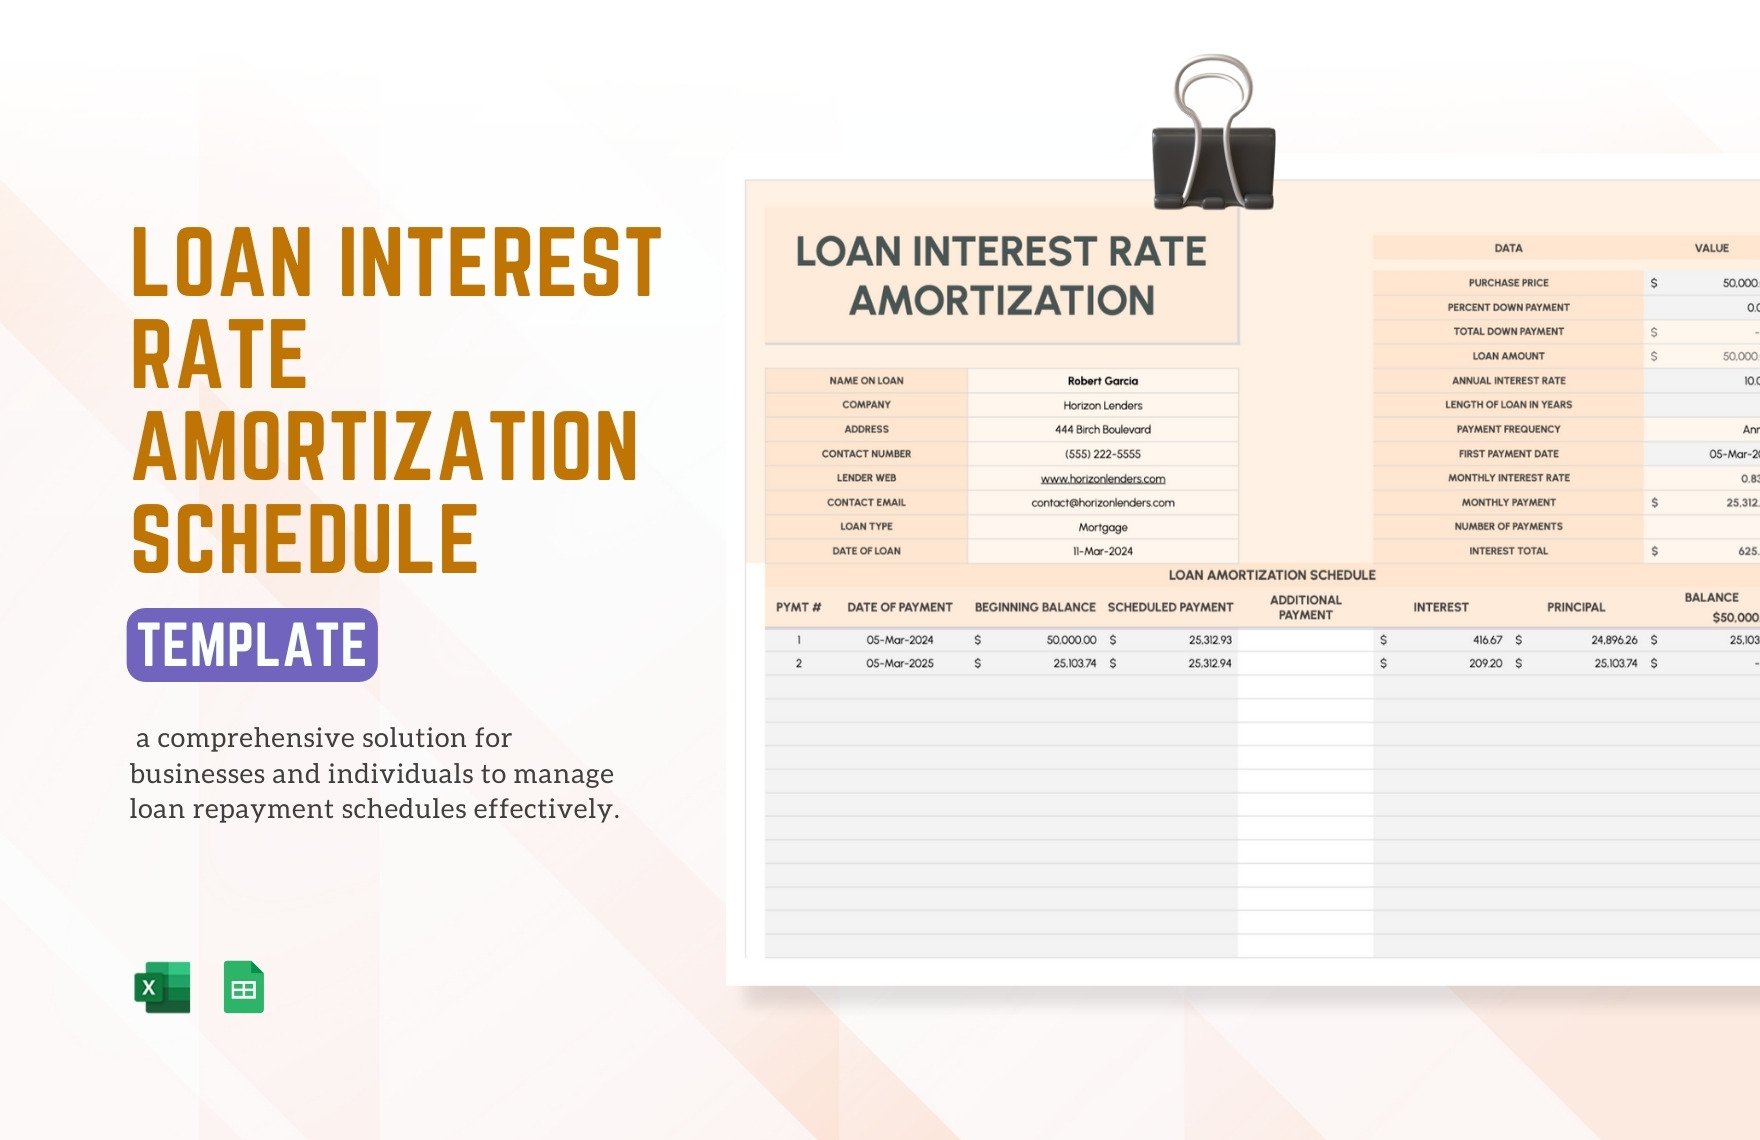 Loan Interest Rate Amortization Schedule Template